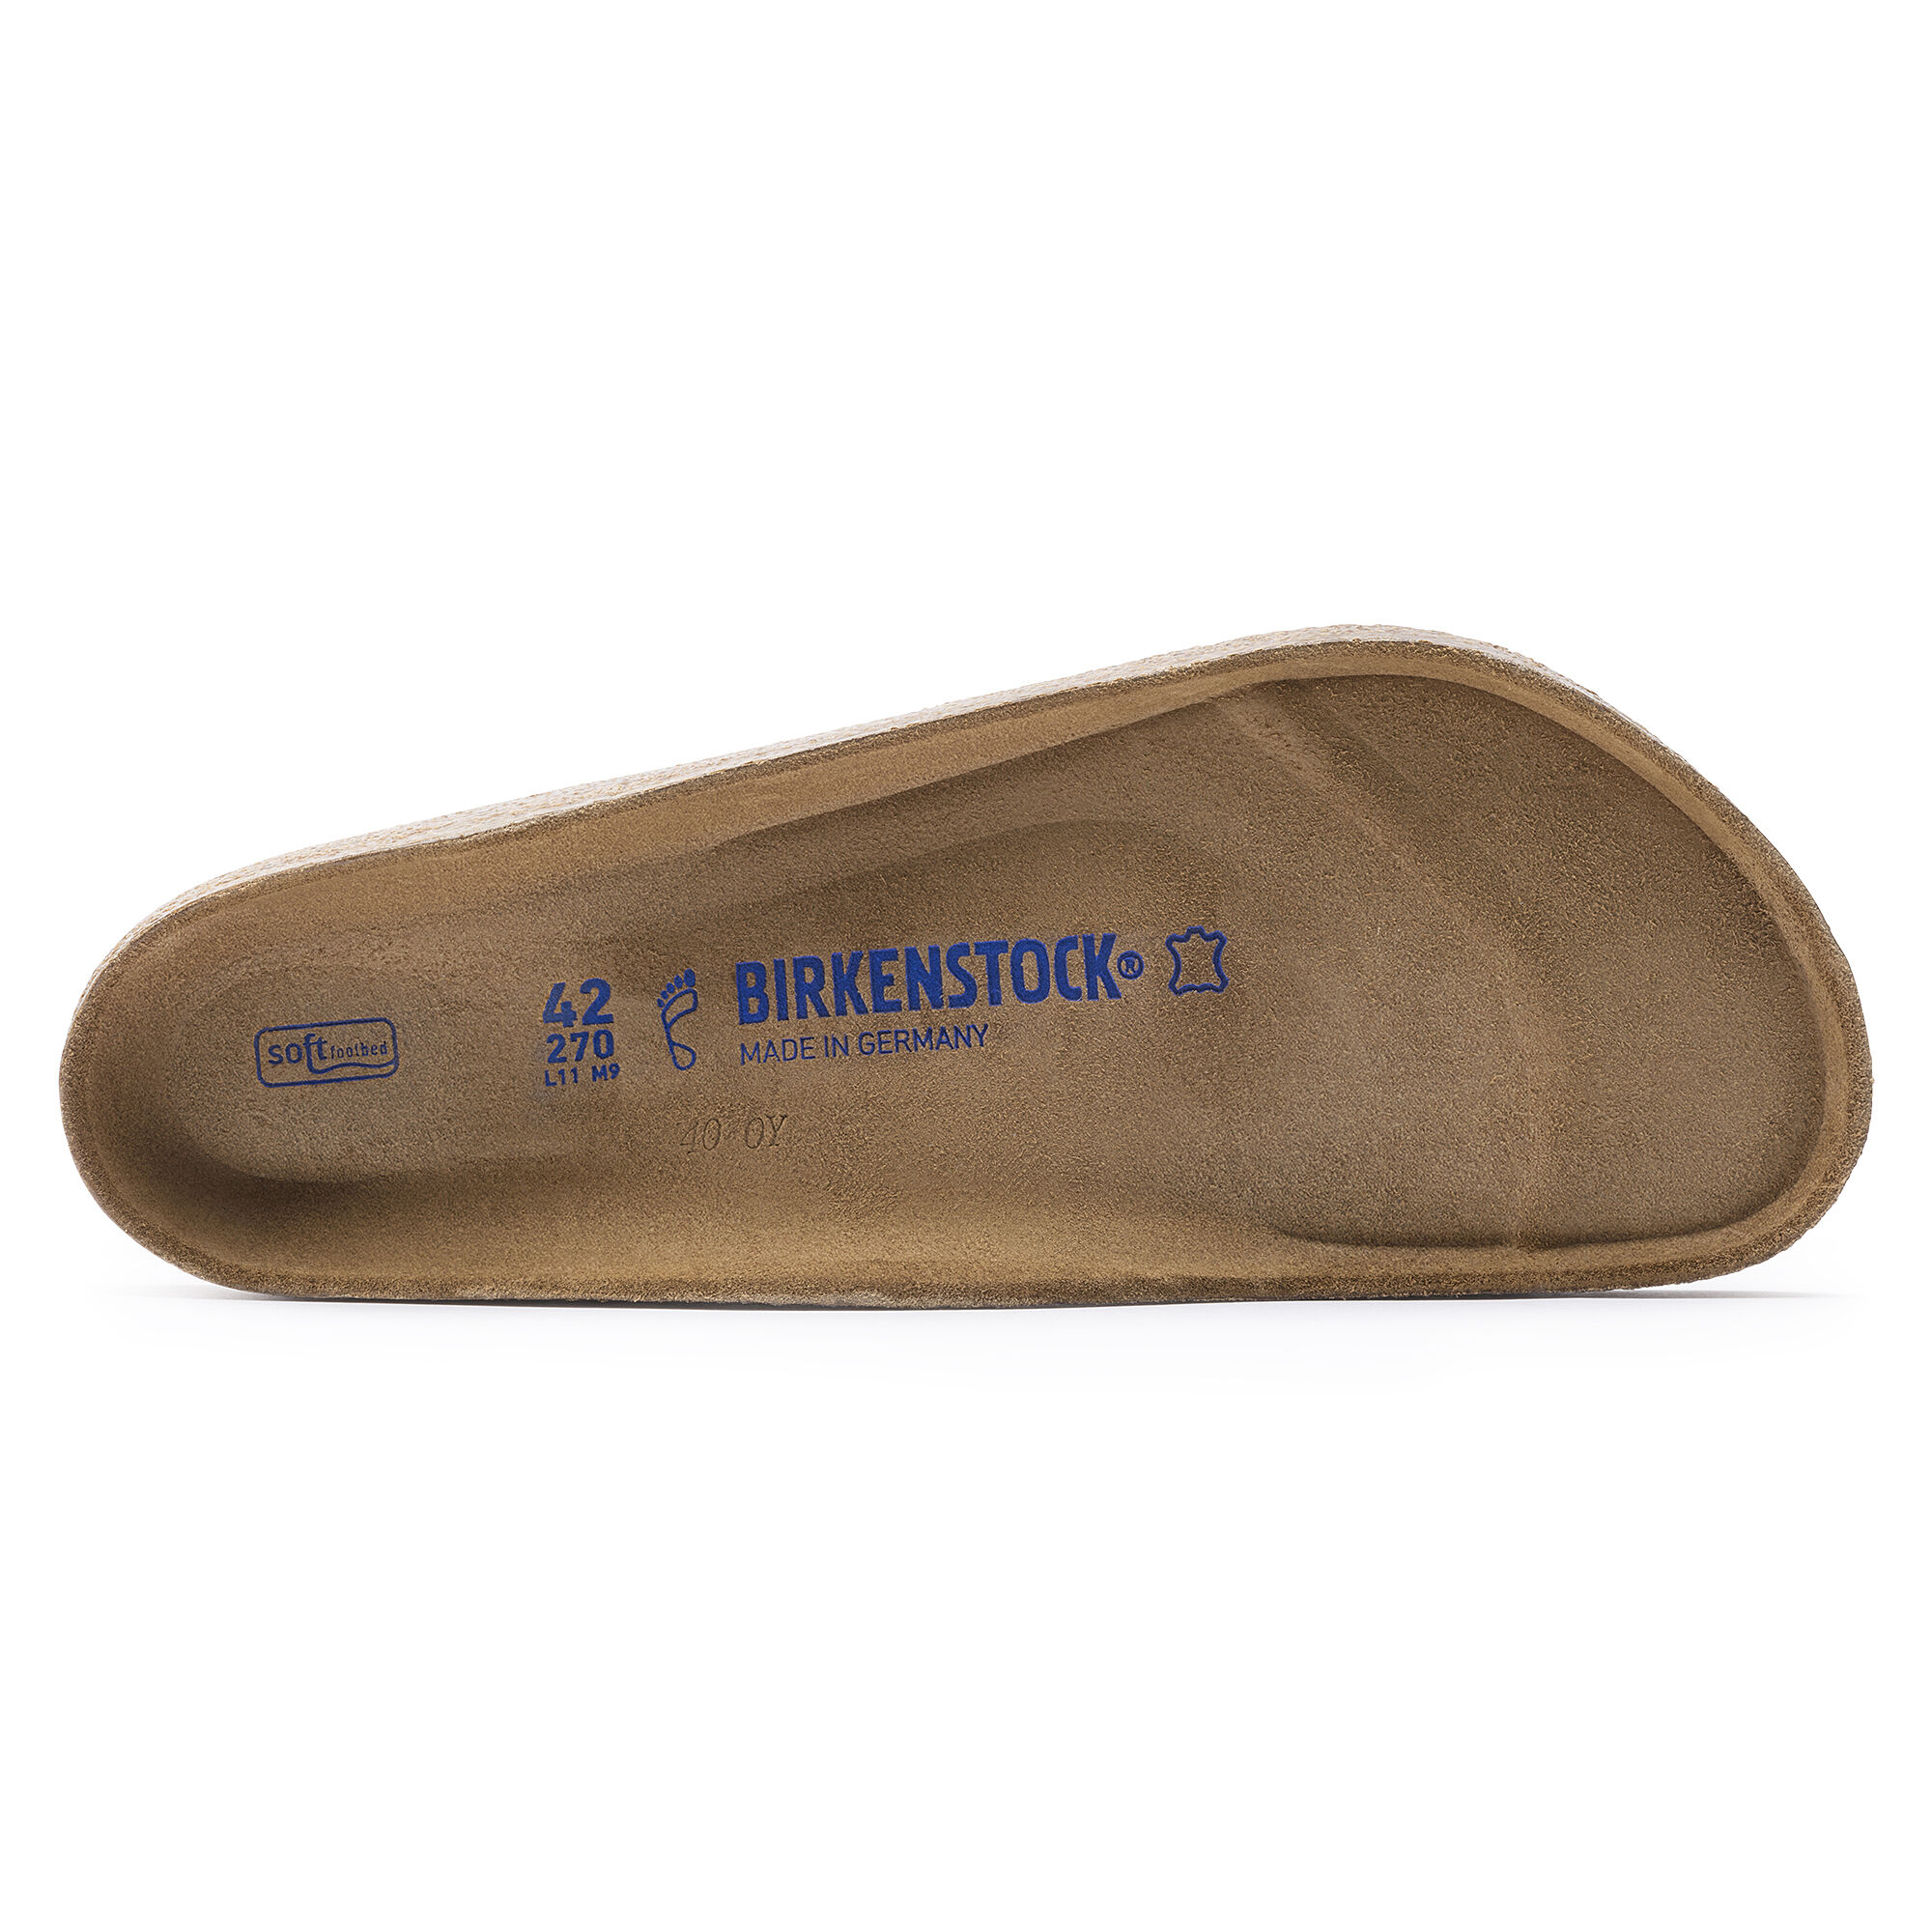 birkenstock soft footbed replacement